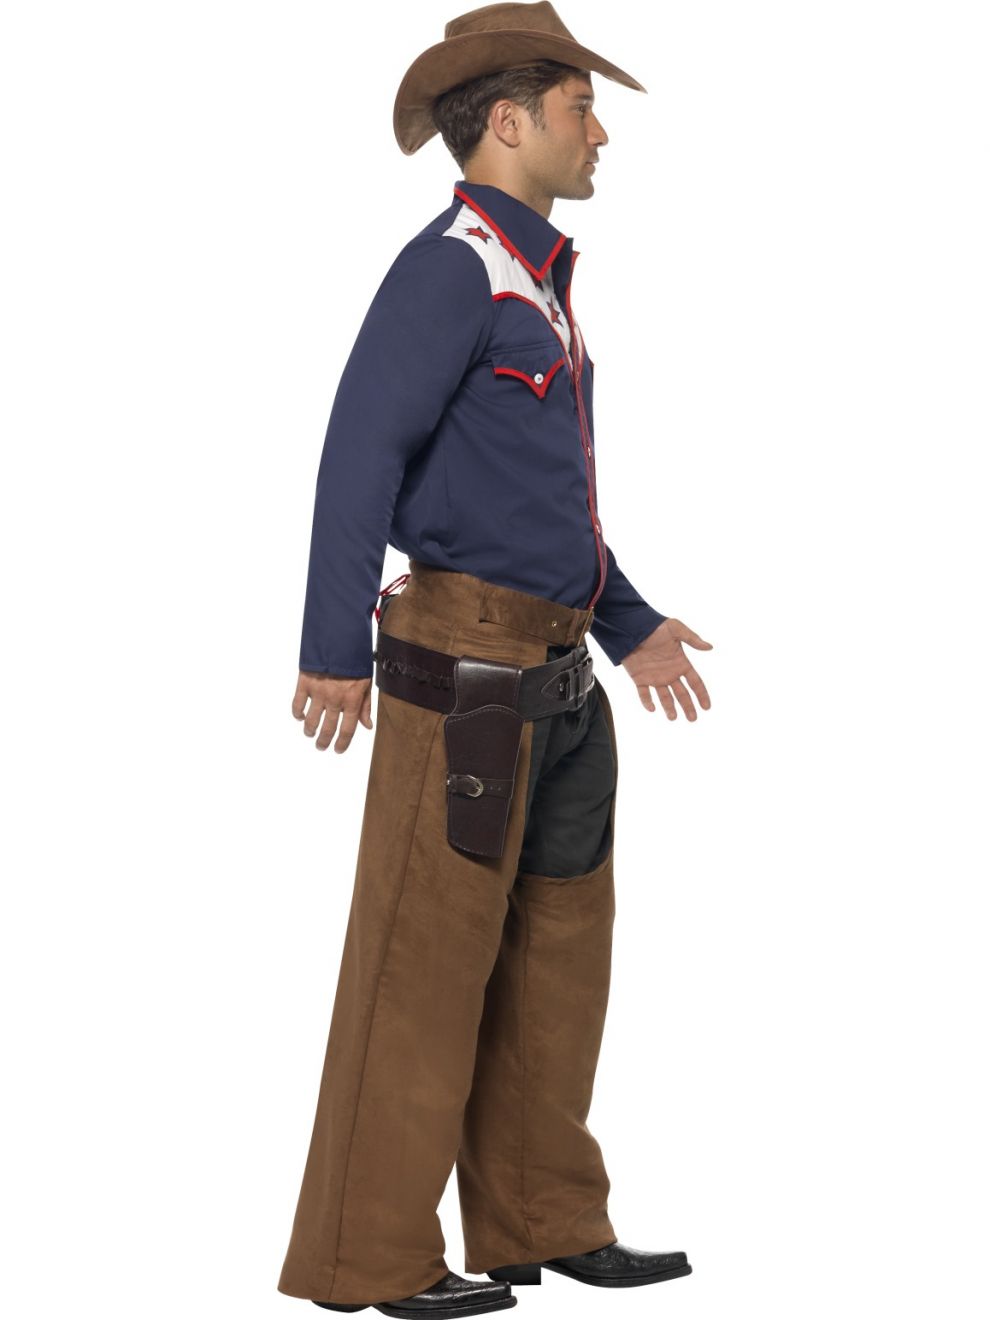 Rodeo Cowboy Men's Costume